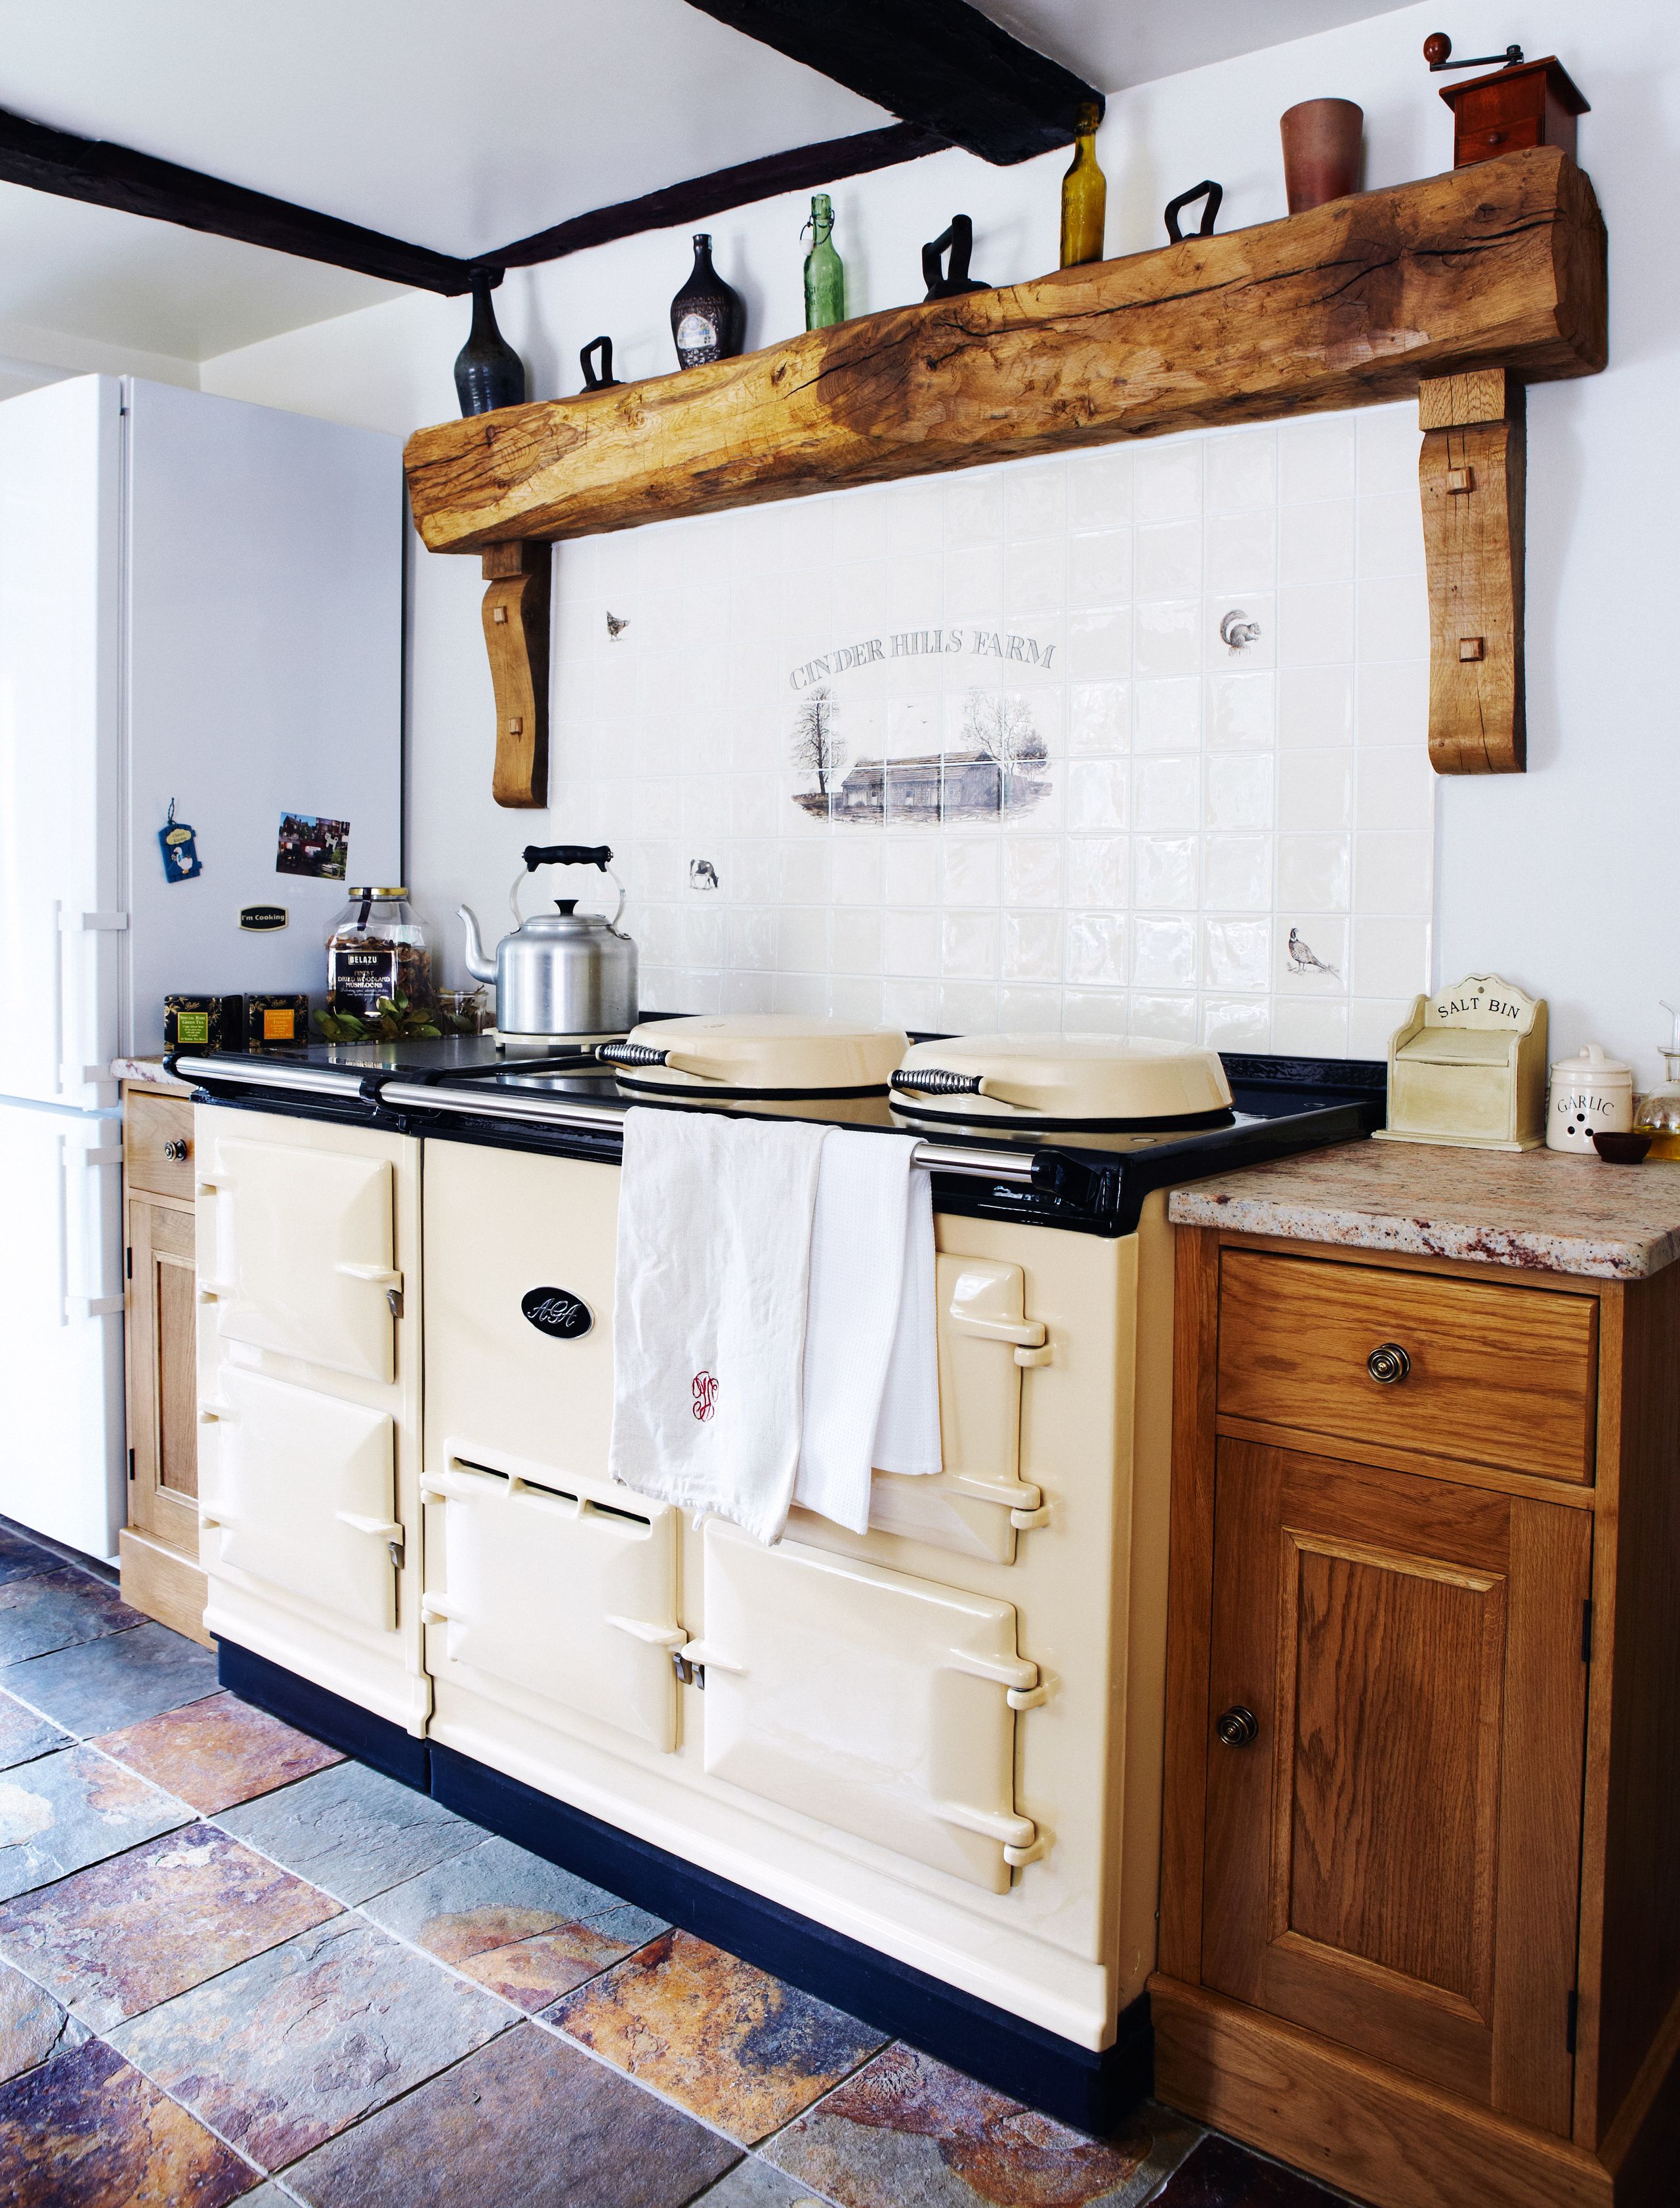 duża kuchenka z serii Aga w Yorkshire farmhouse kitchen